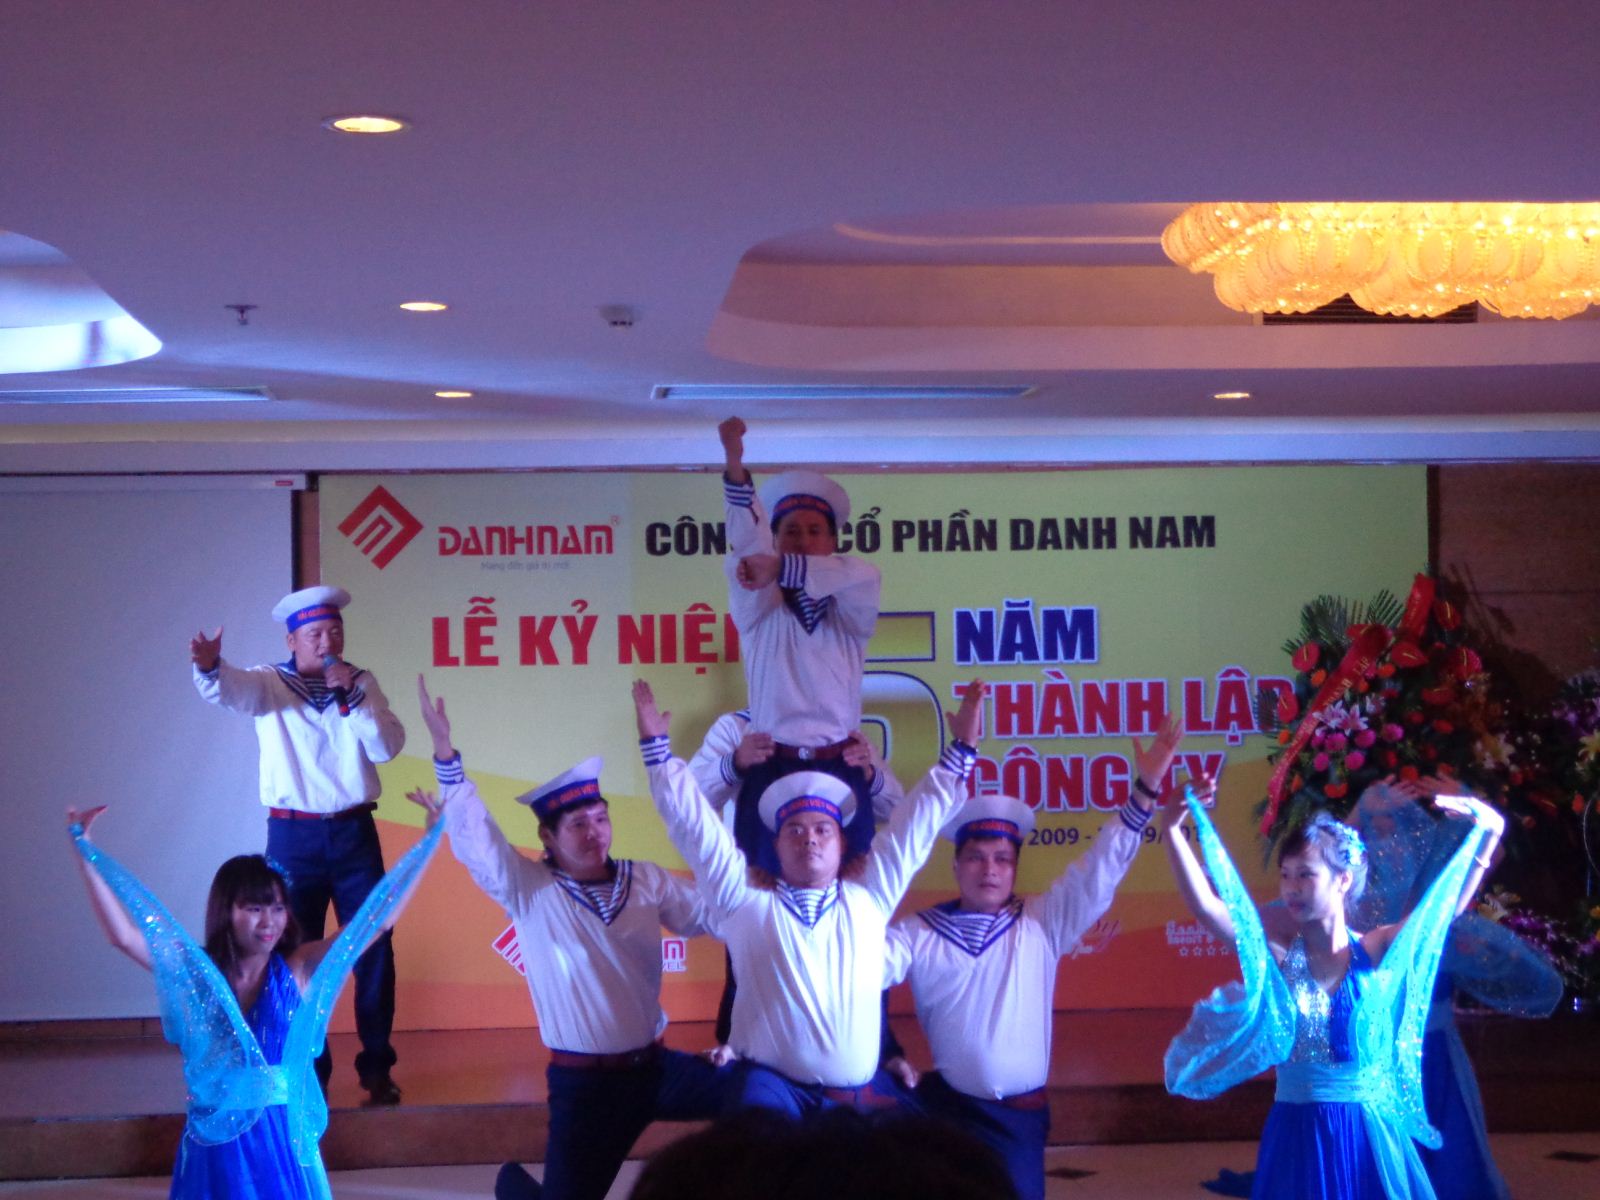 Danh Nam got talent